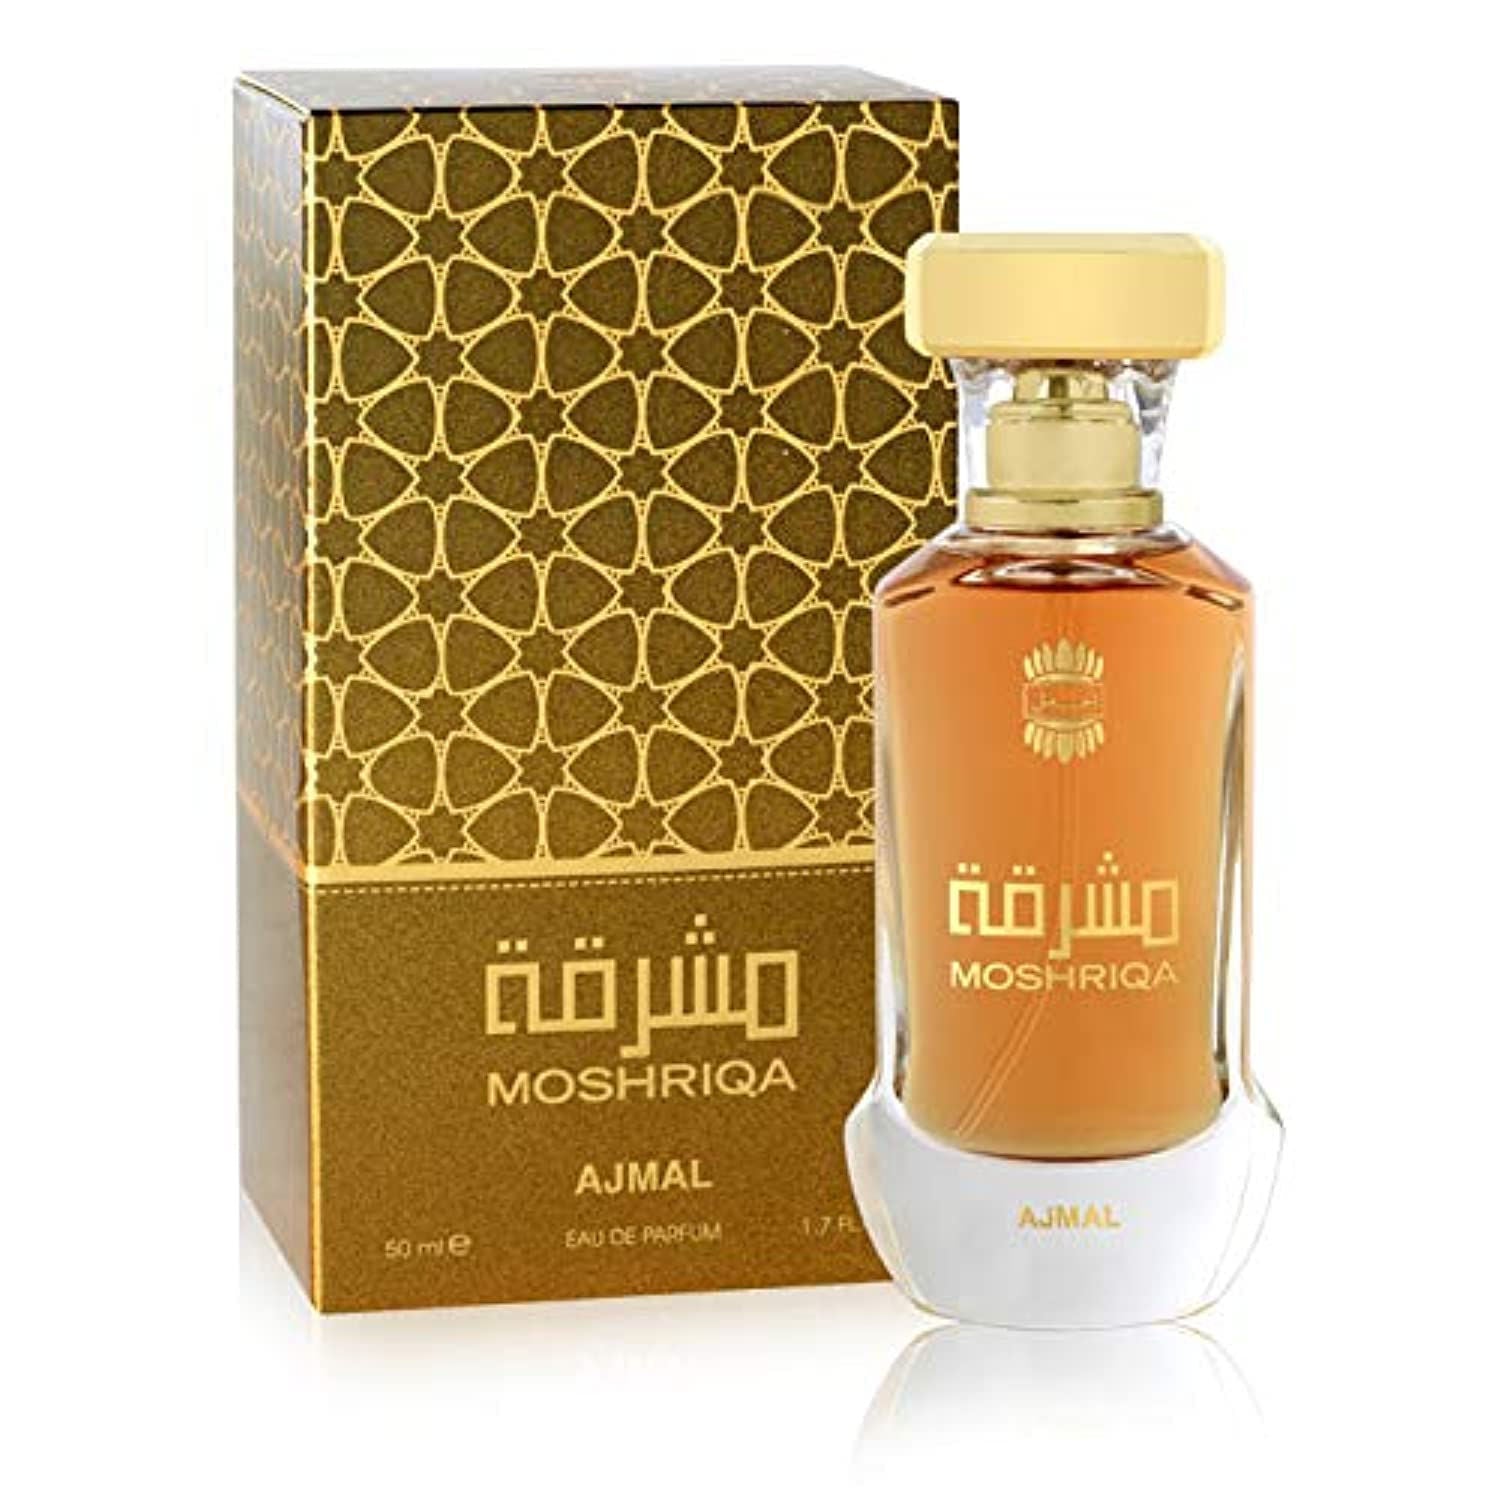 Moshriqa Edp 50Ml By Ajmal Perfume